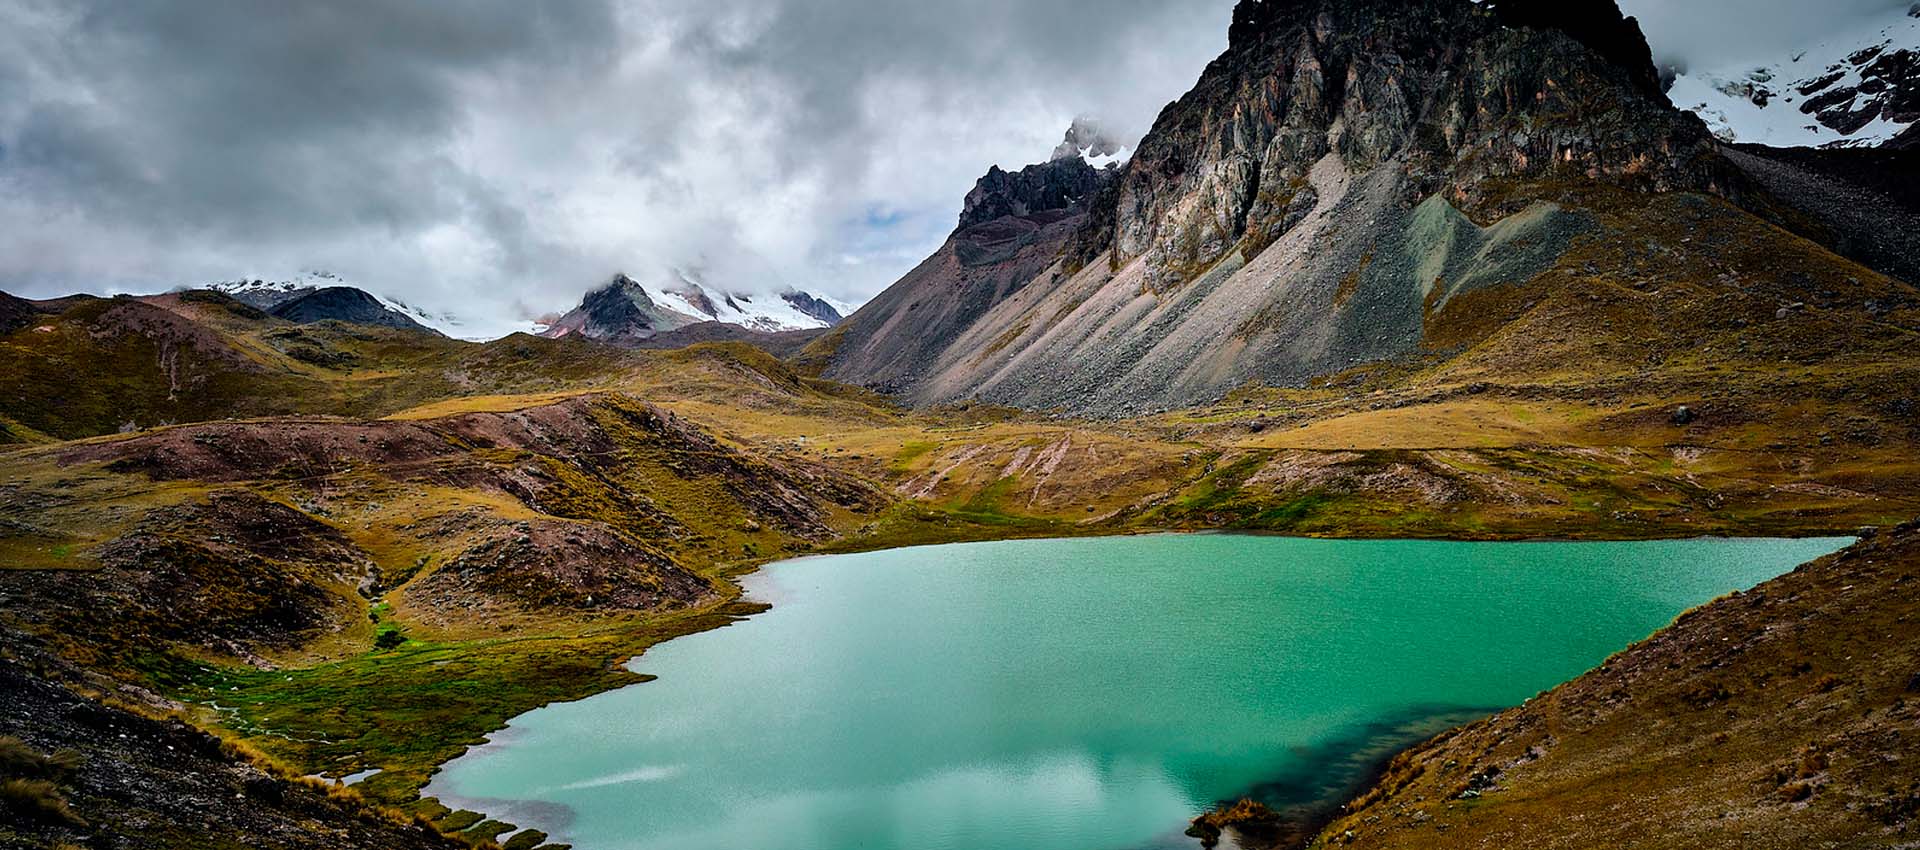 Ausangate Rainbow Mountain Trek 6 Days - Orange Nation Peru